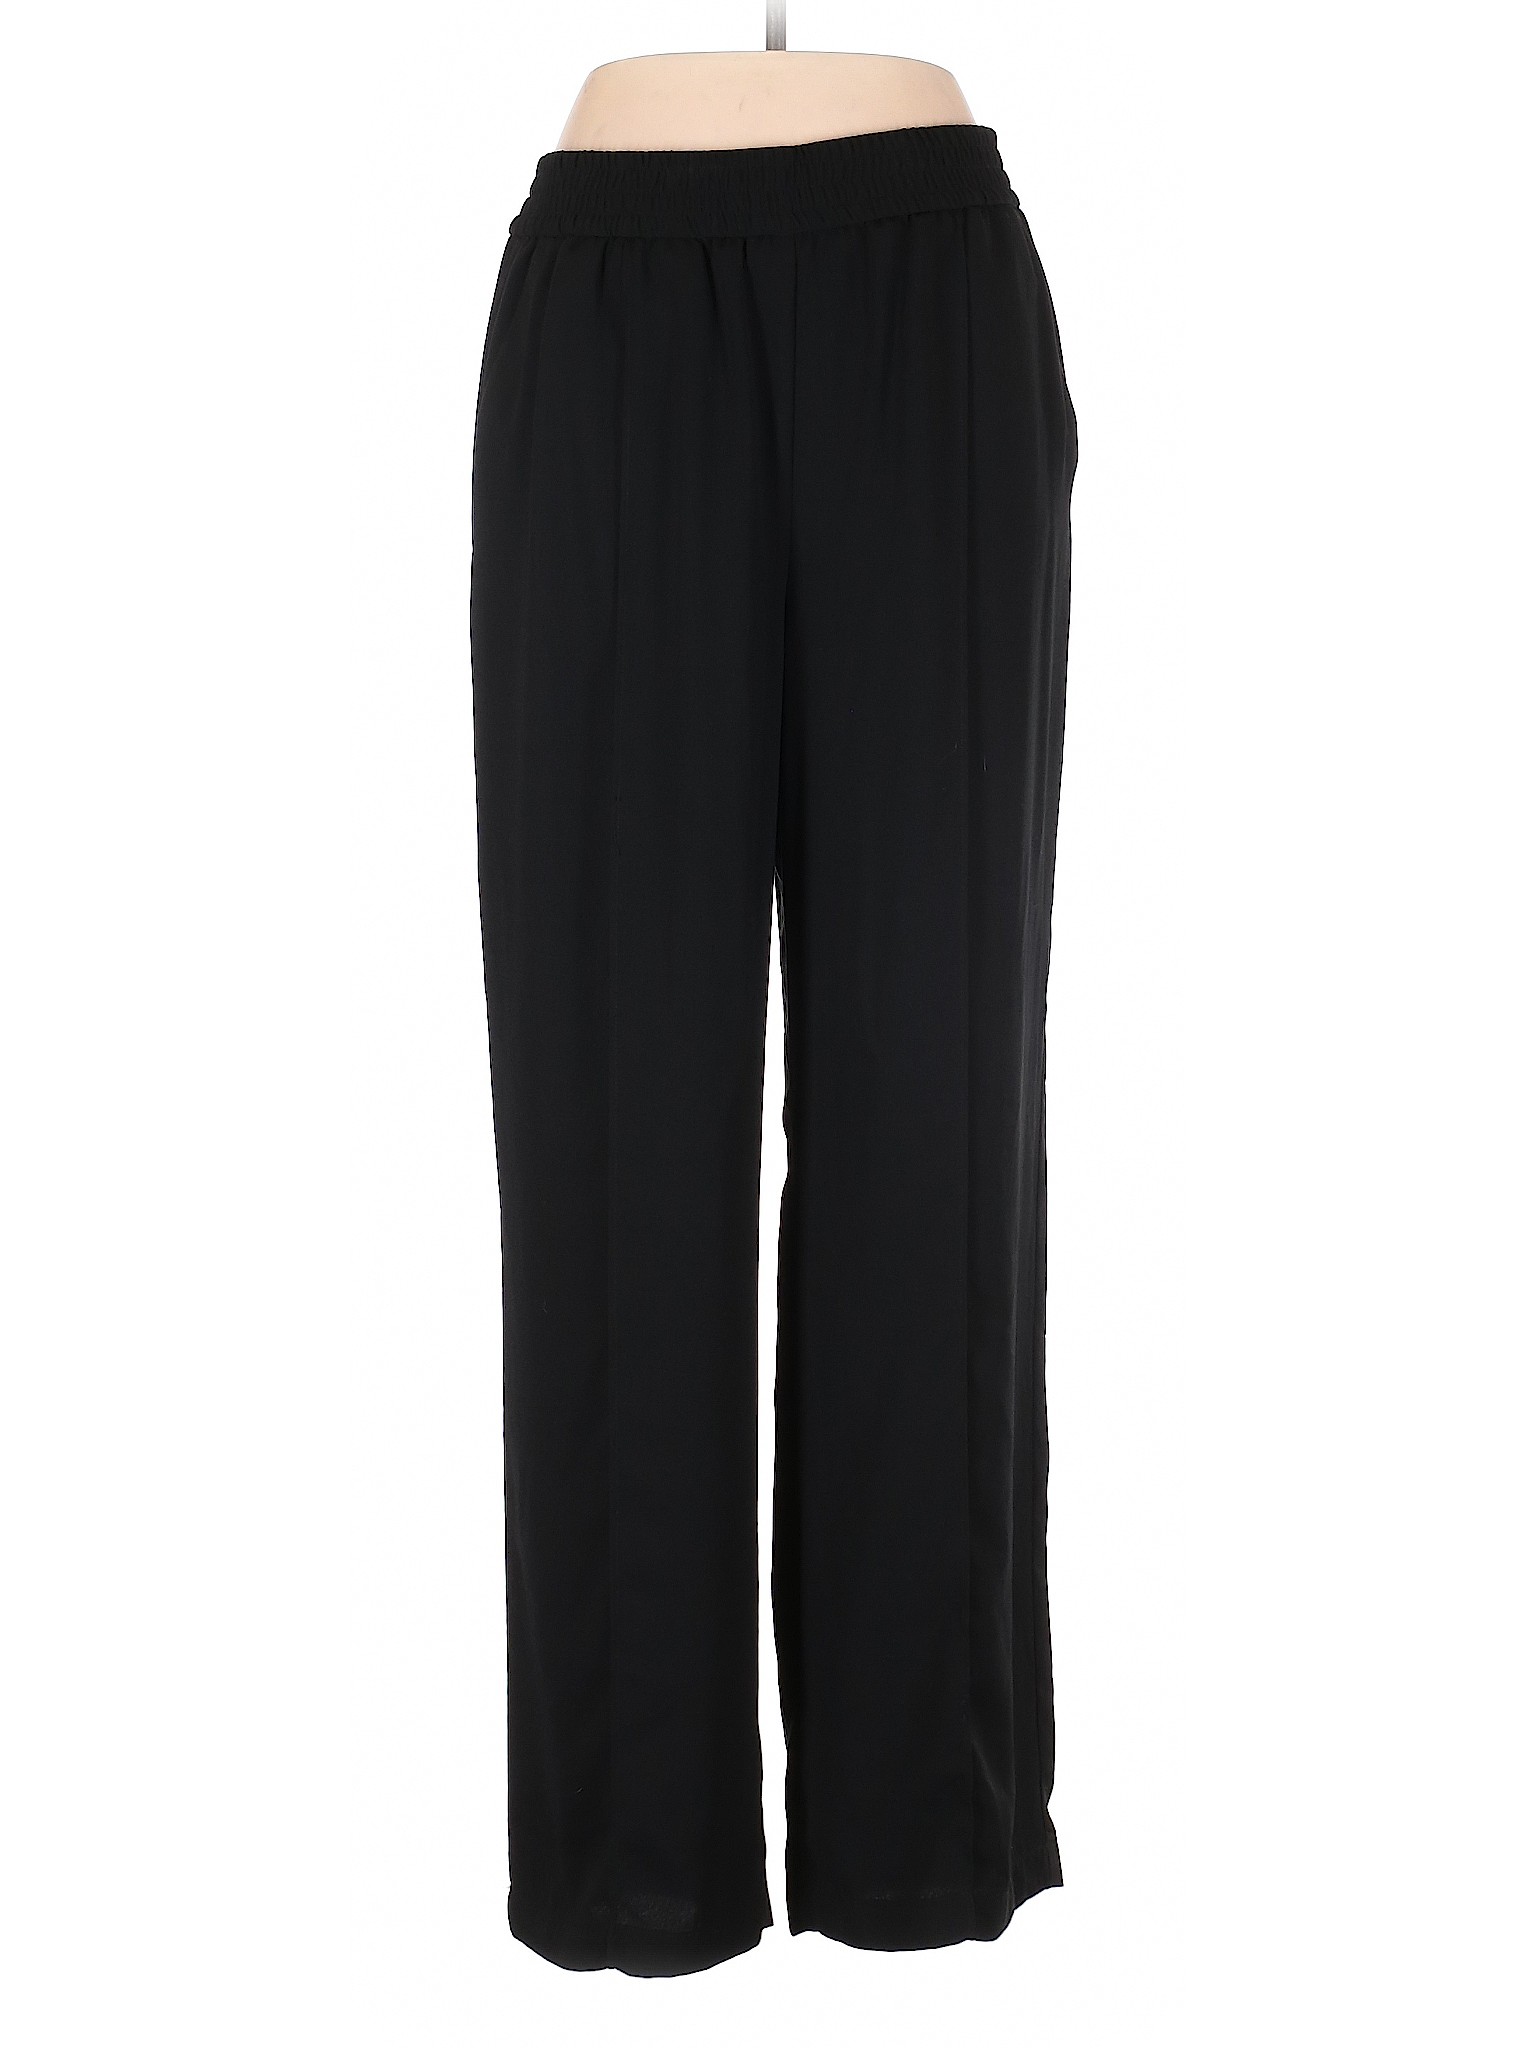 A New Day Women Black Casual Pants L | eBay